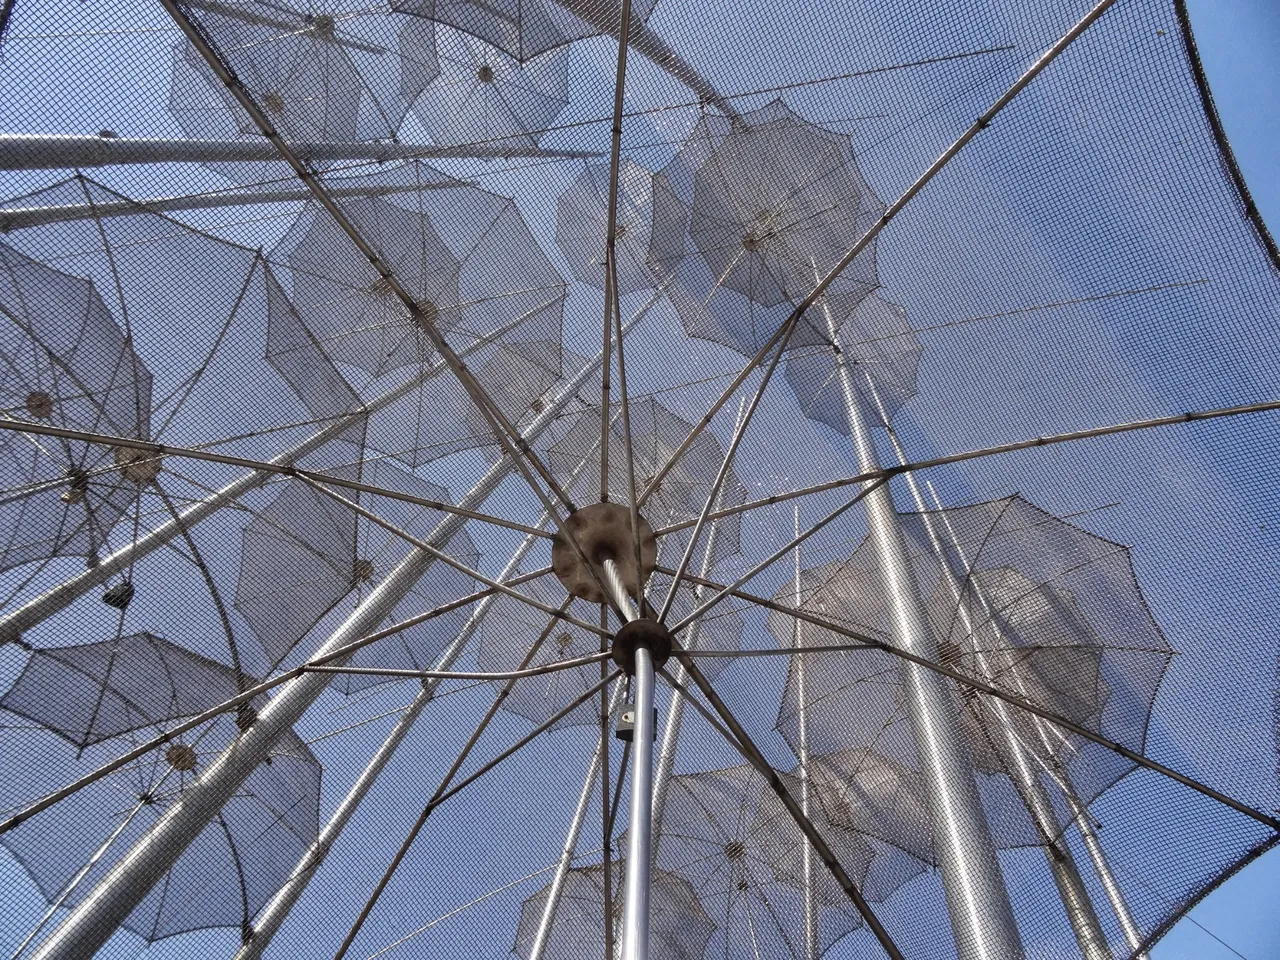 The umbrellas are art